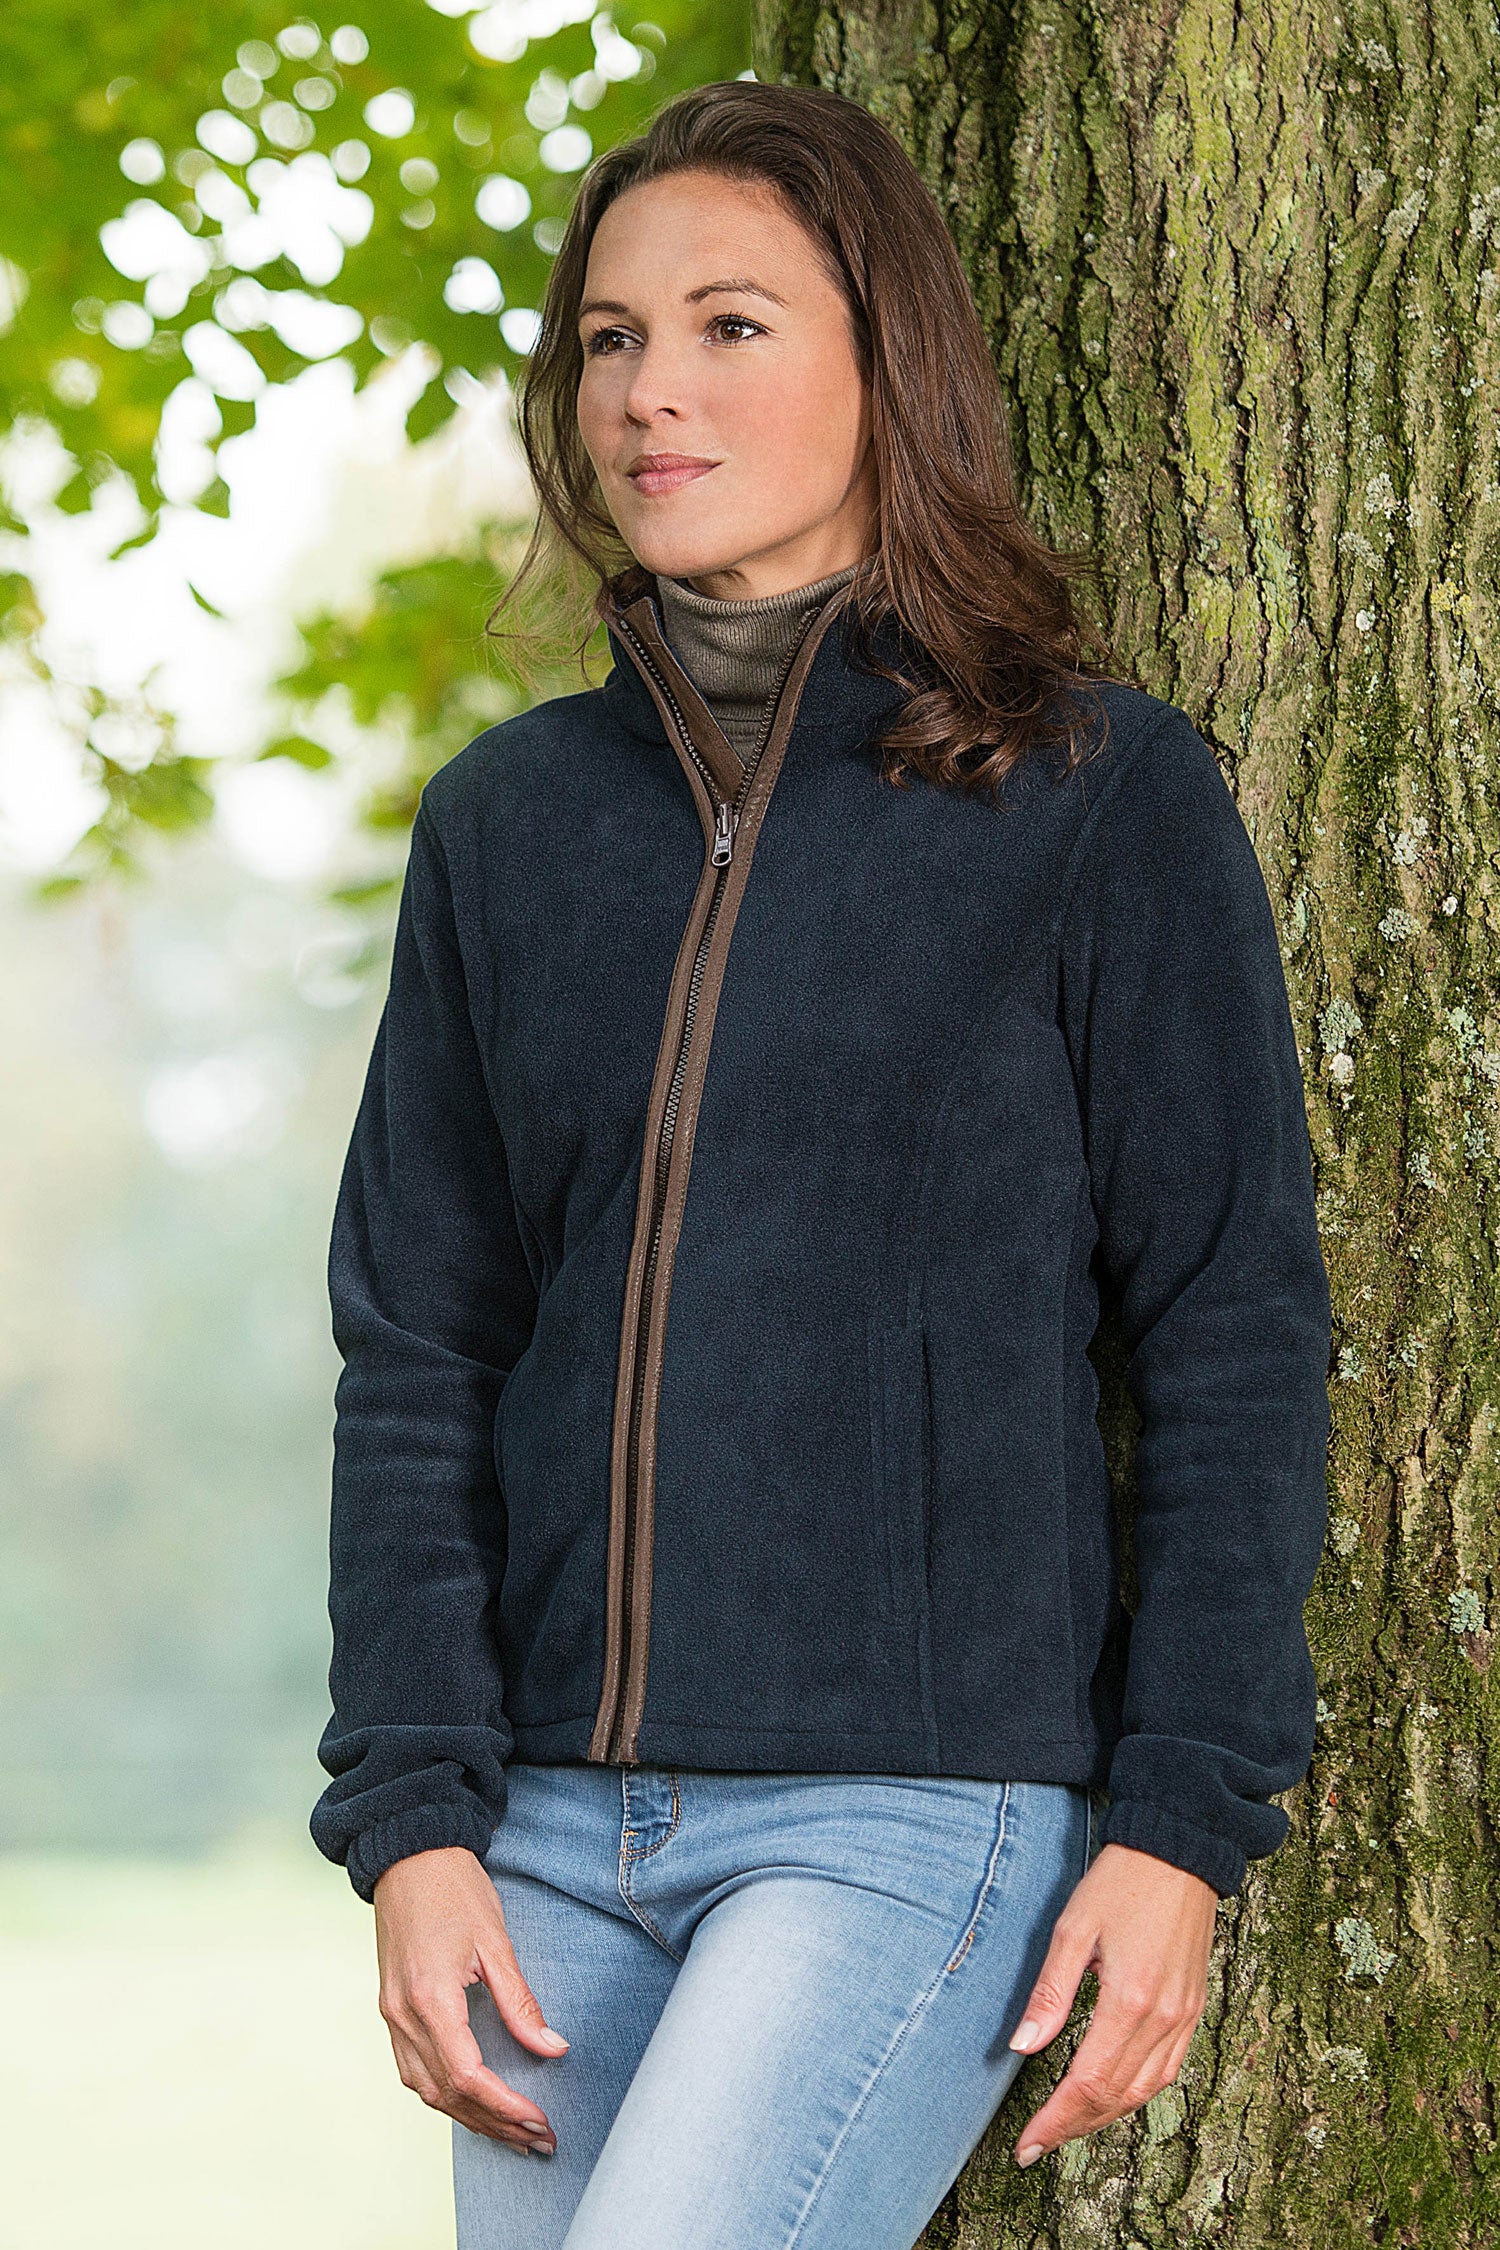 Sarah ladies stylish fleece jacket